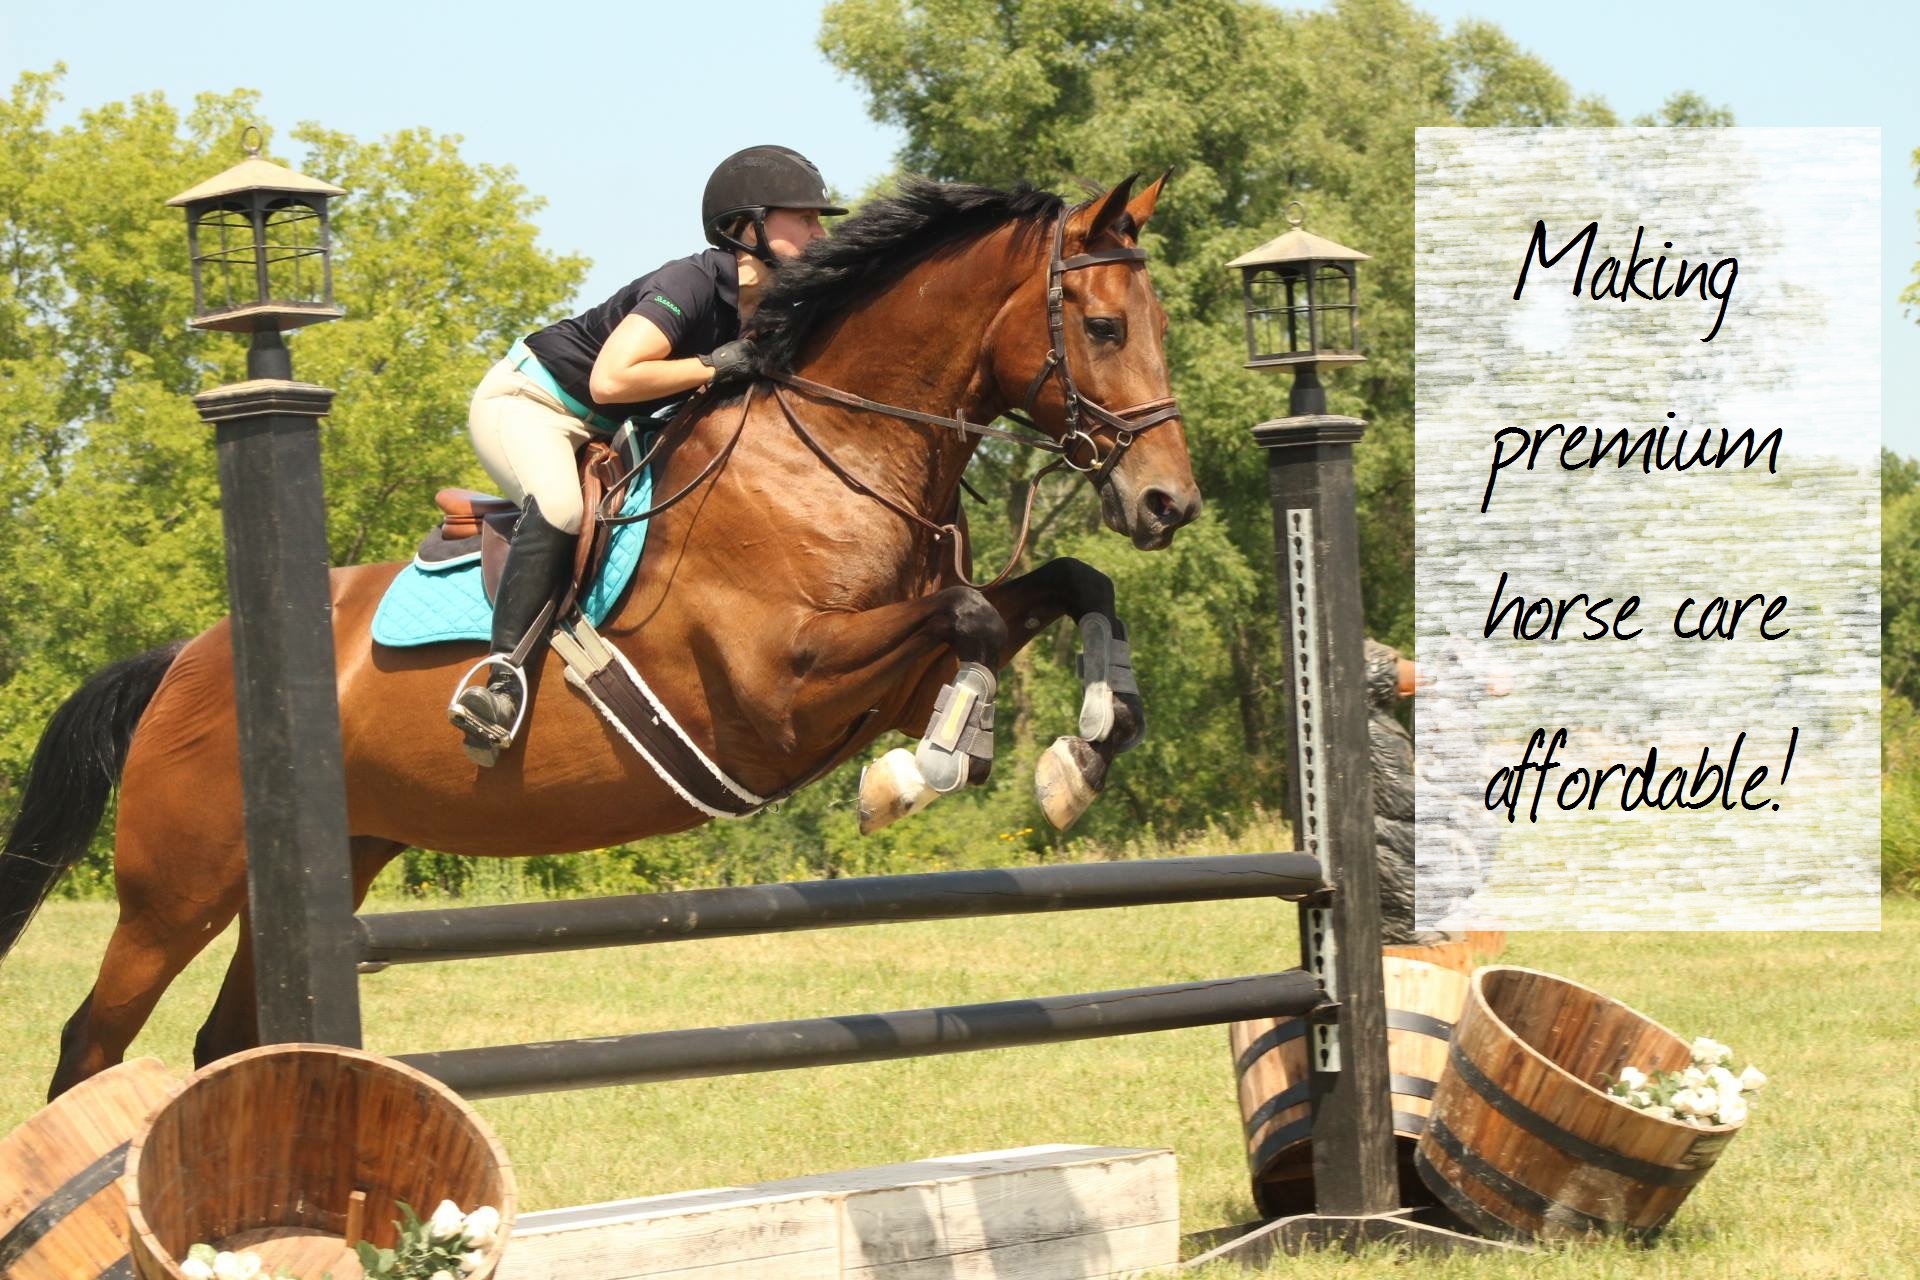 Making premium horse care affordable!